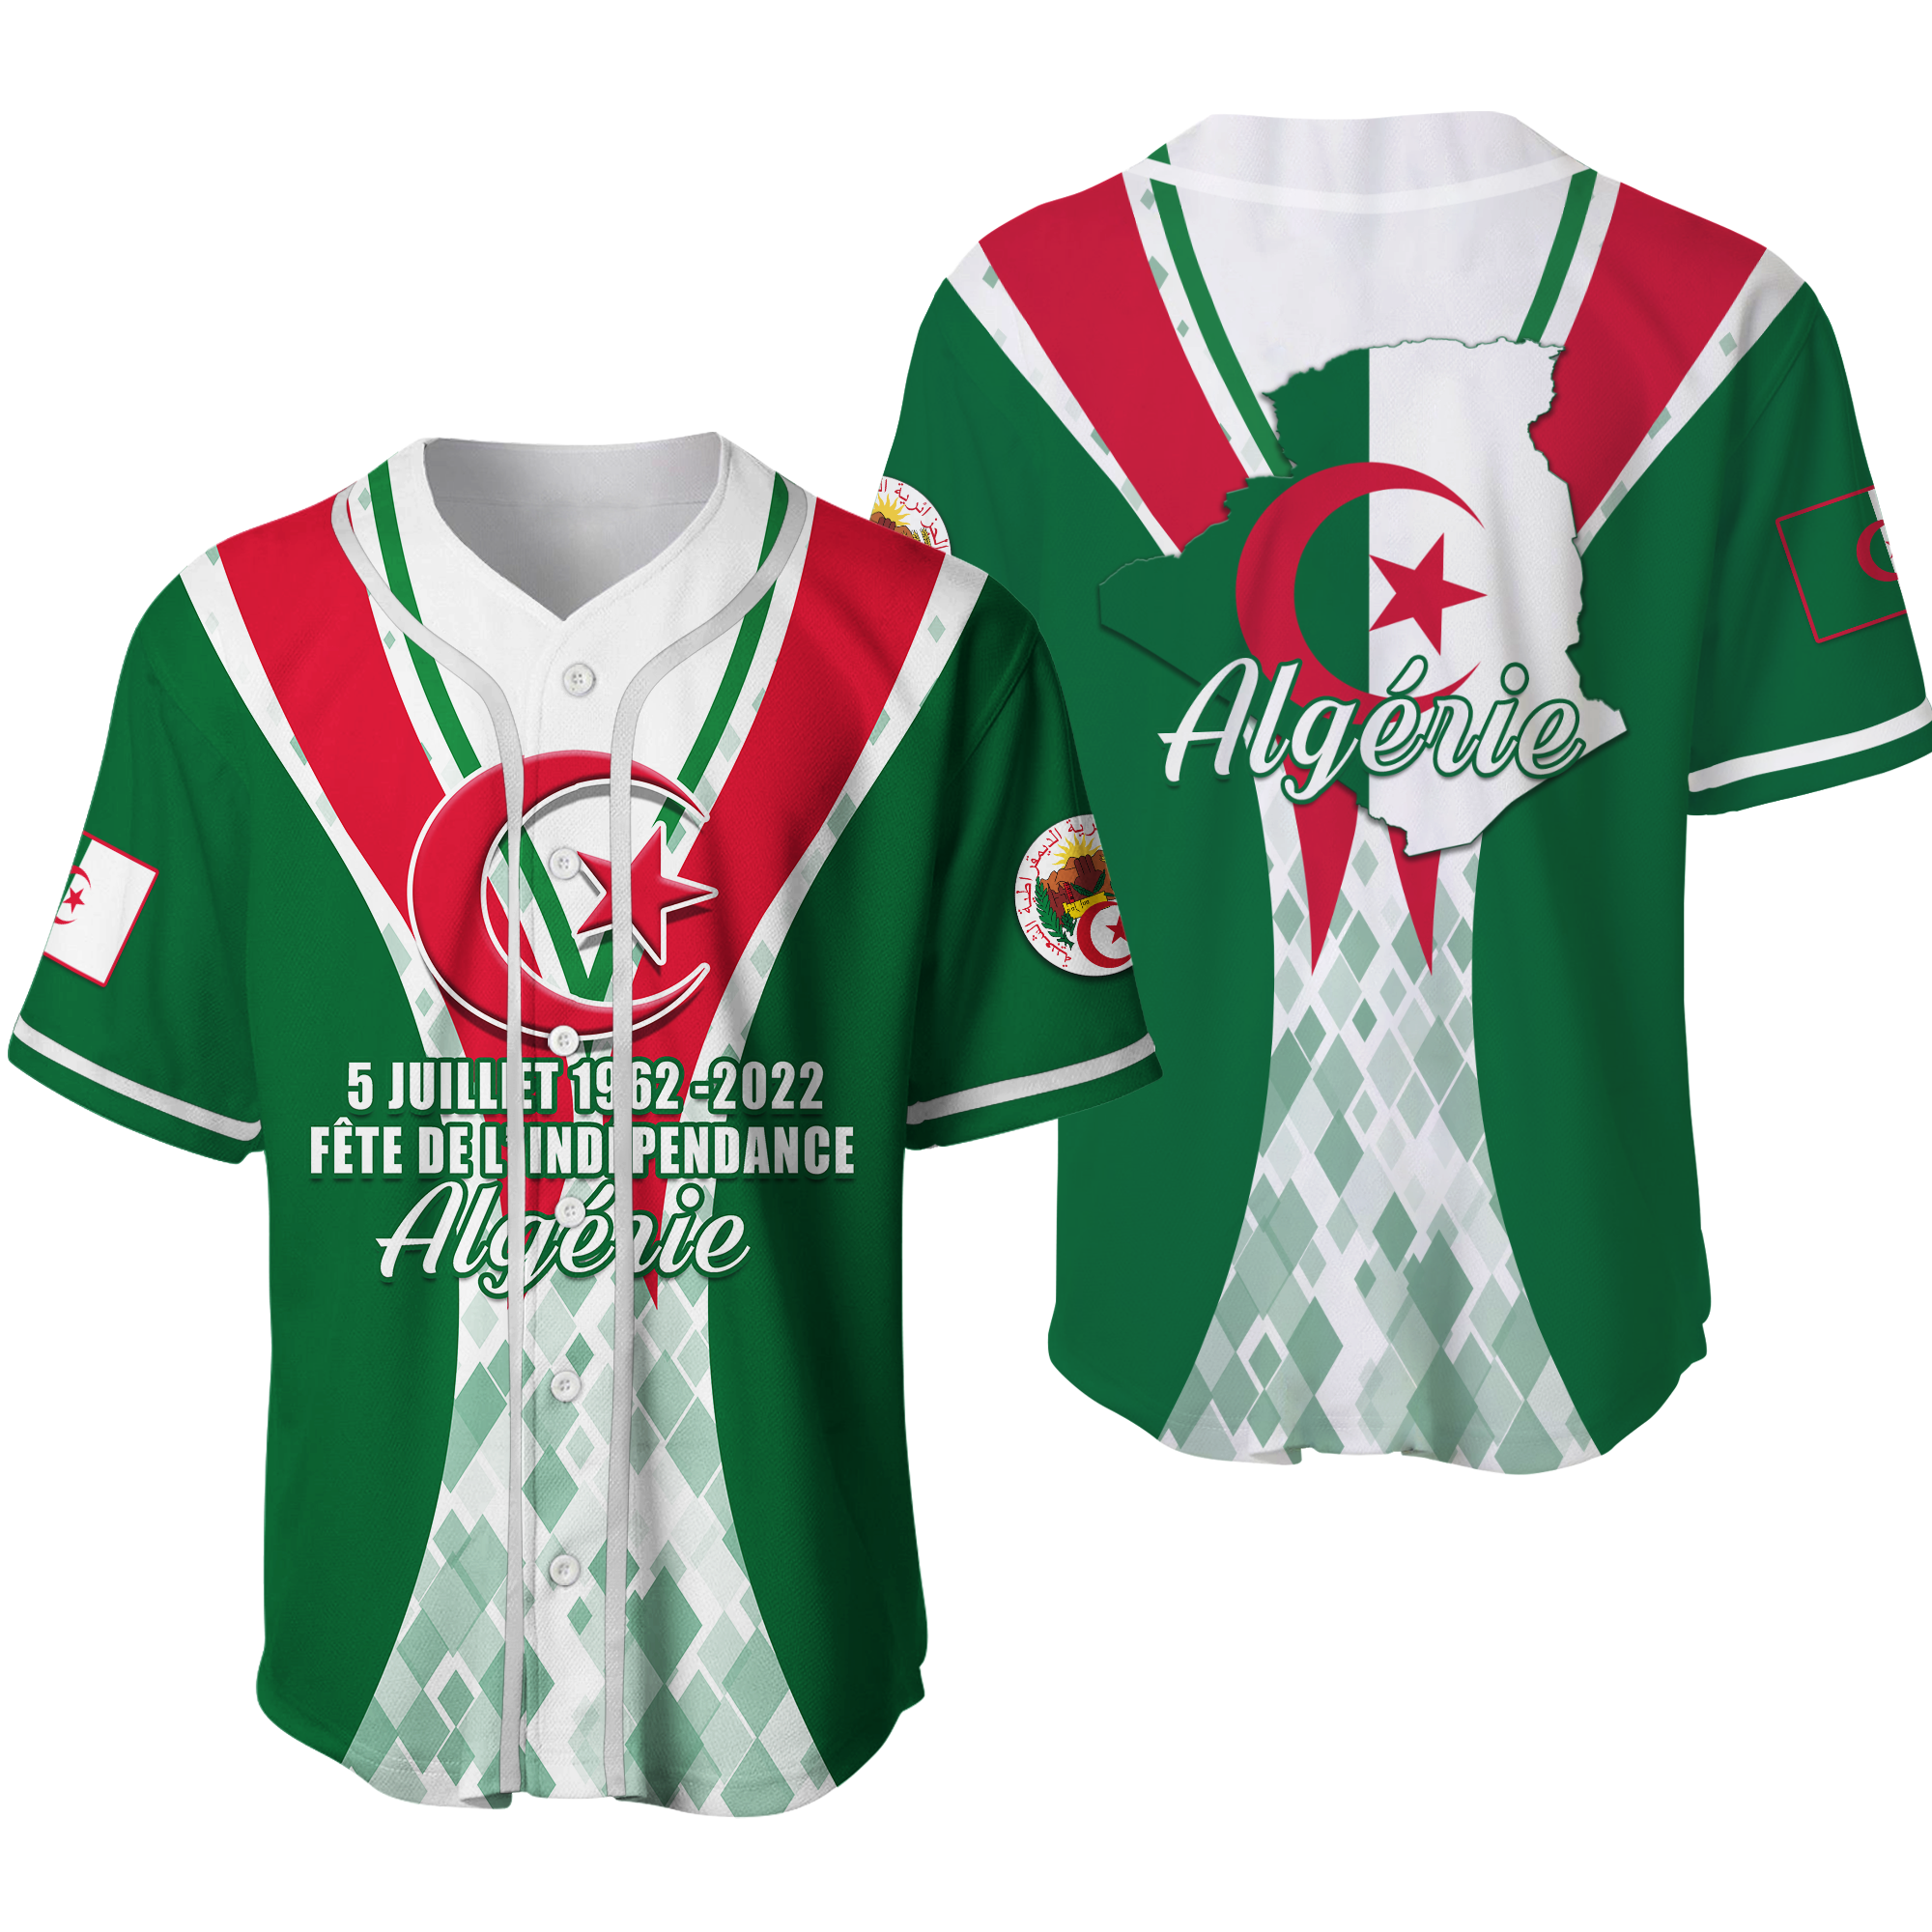 algeria-independence-day-5-juillet-1962-2022-baseball-jersey